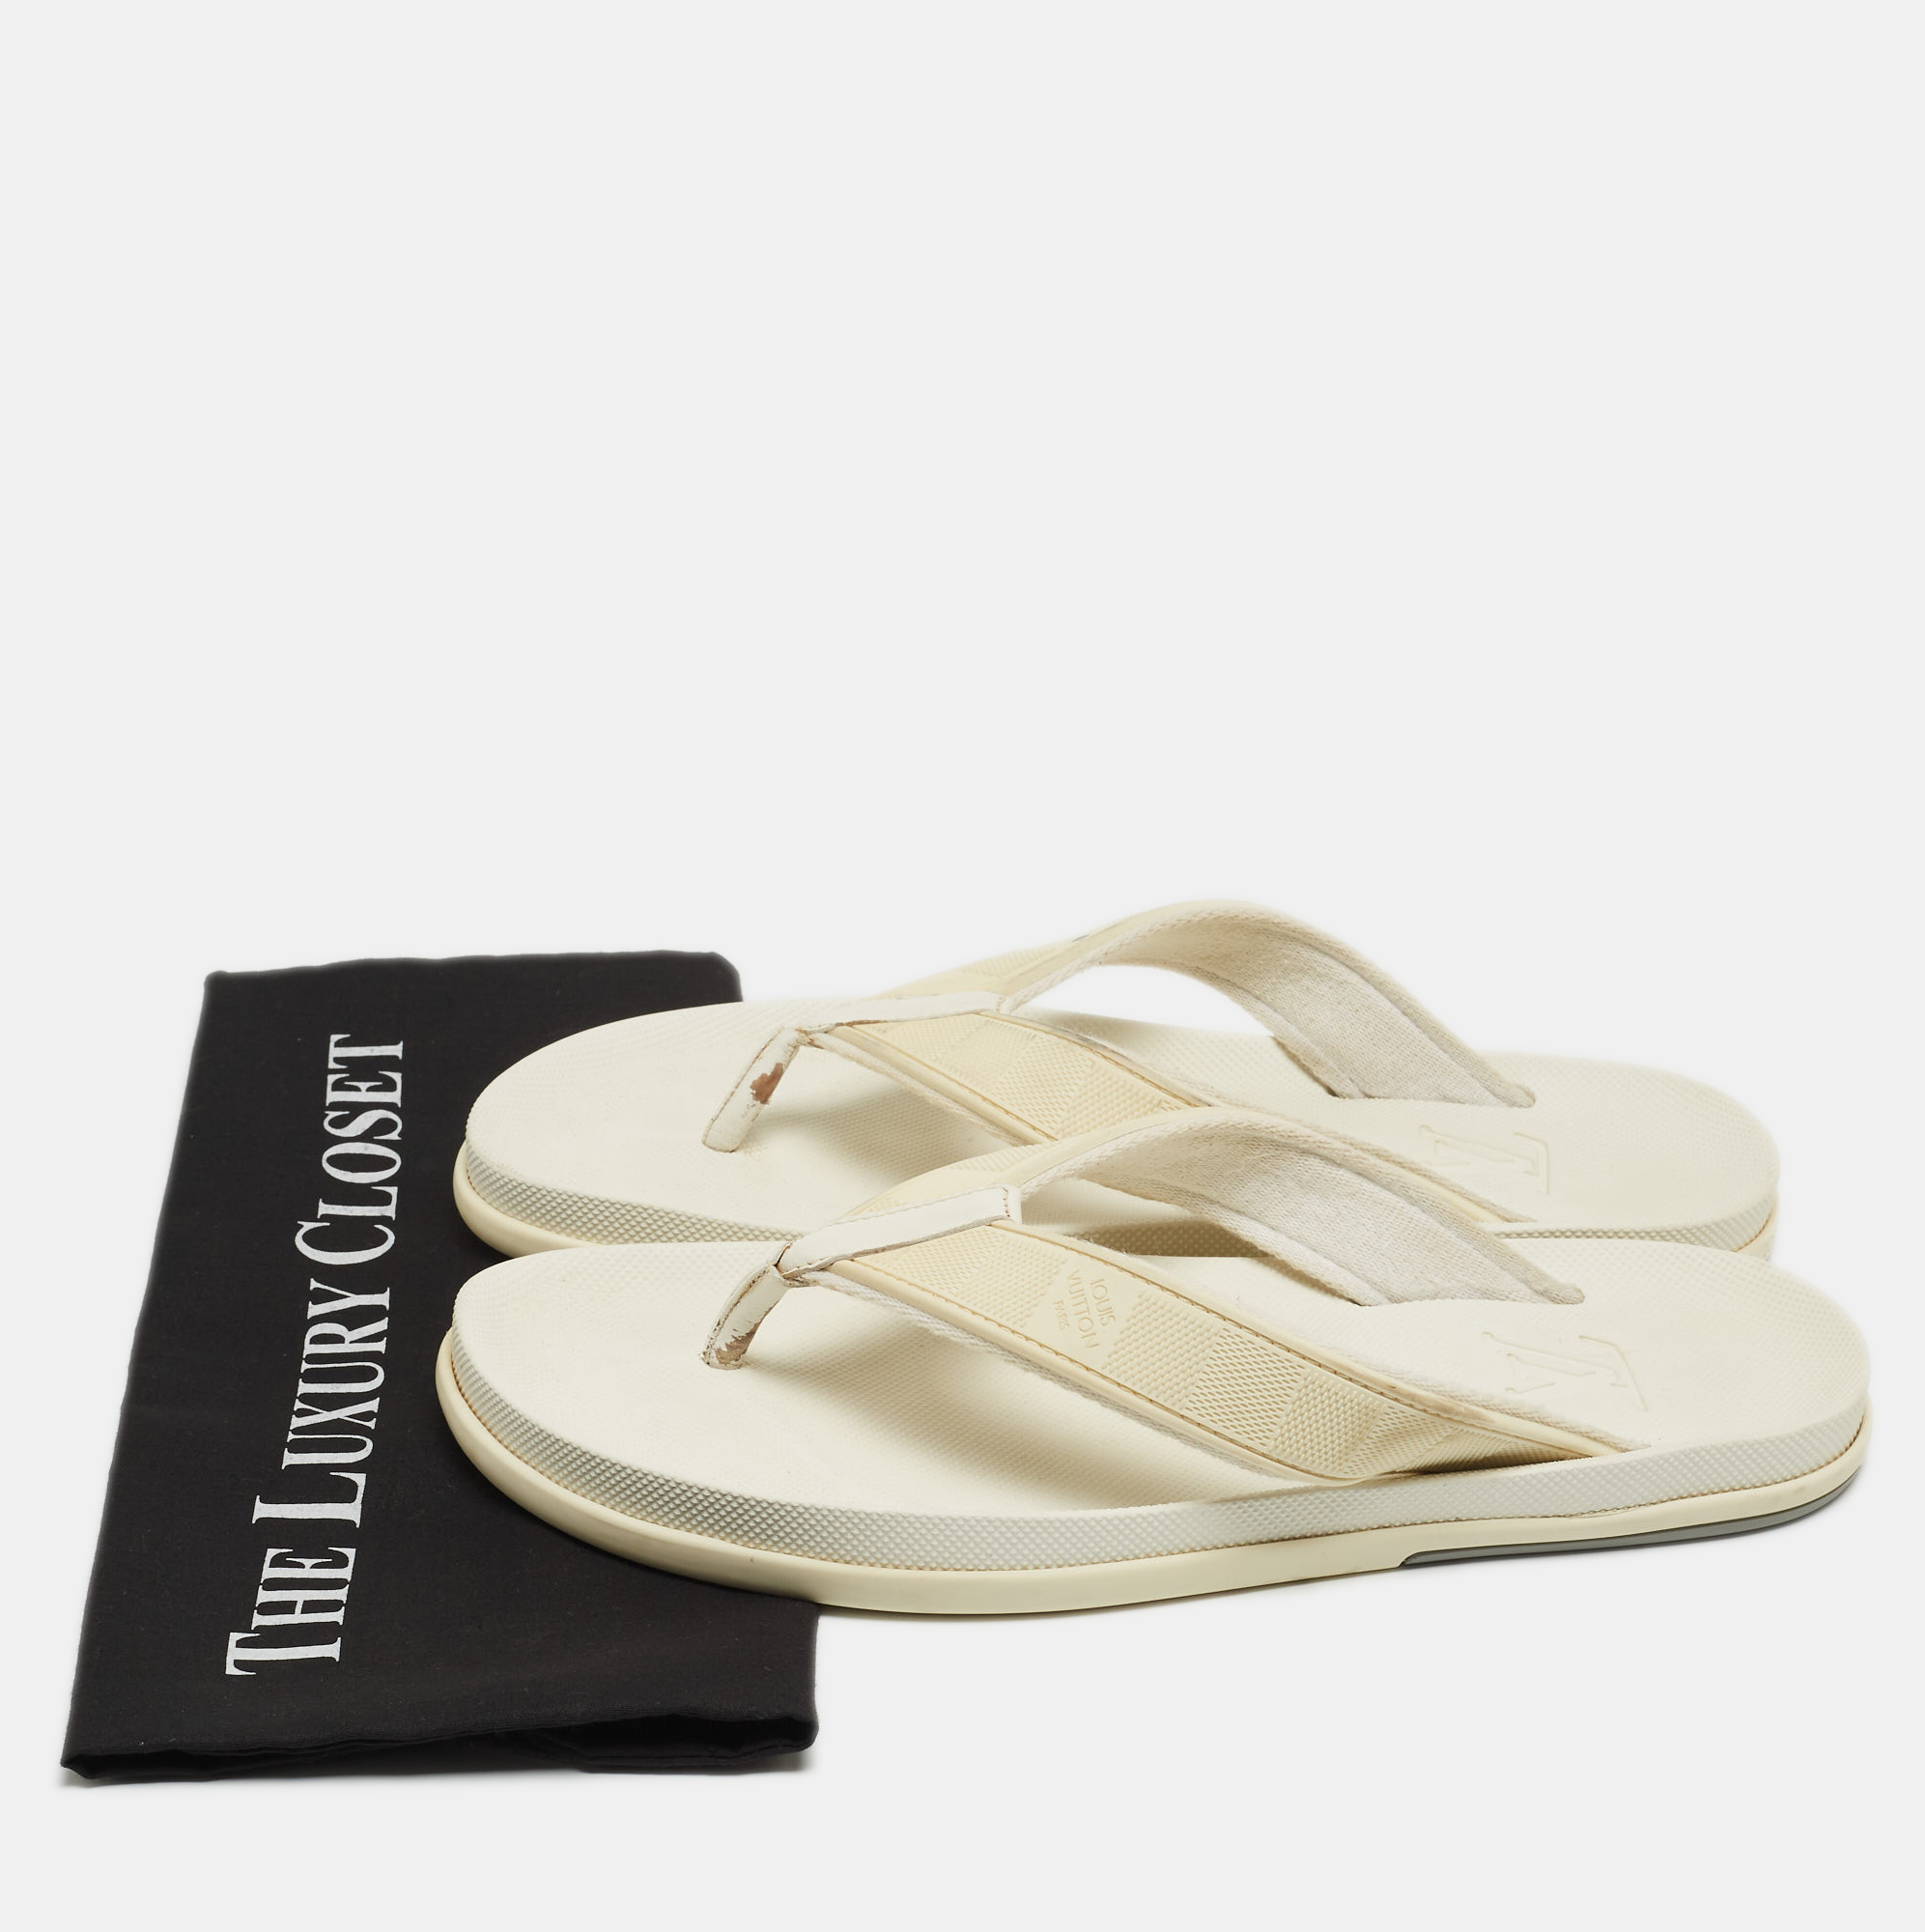 Louis Vuitton White Damier Rubber Thong Flats Size 42.5